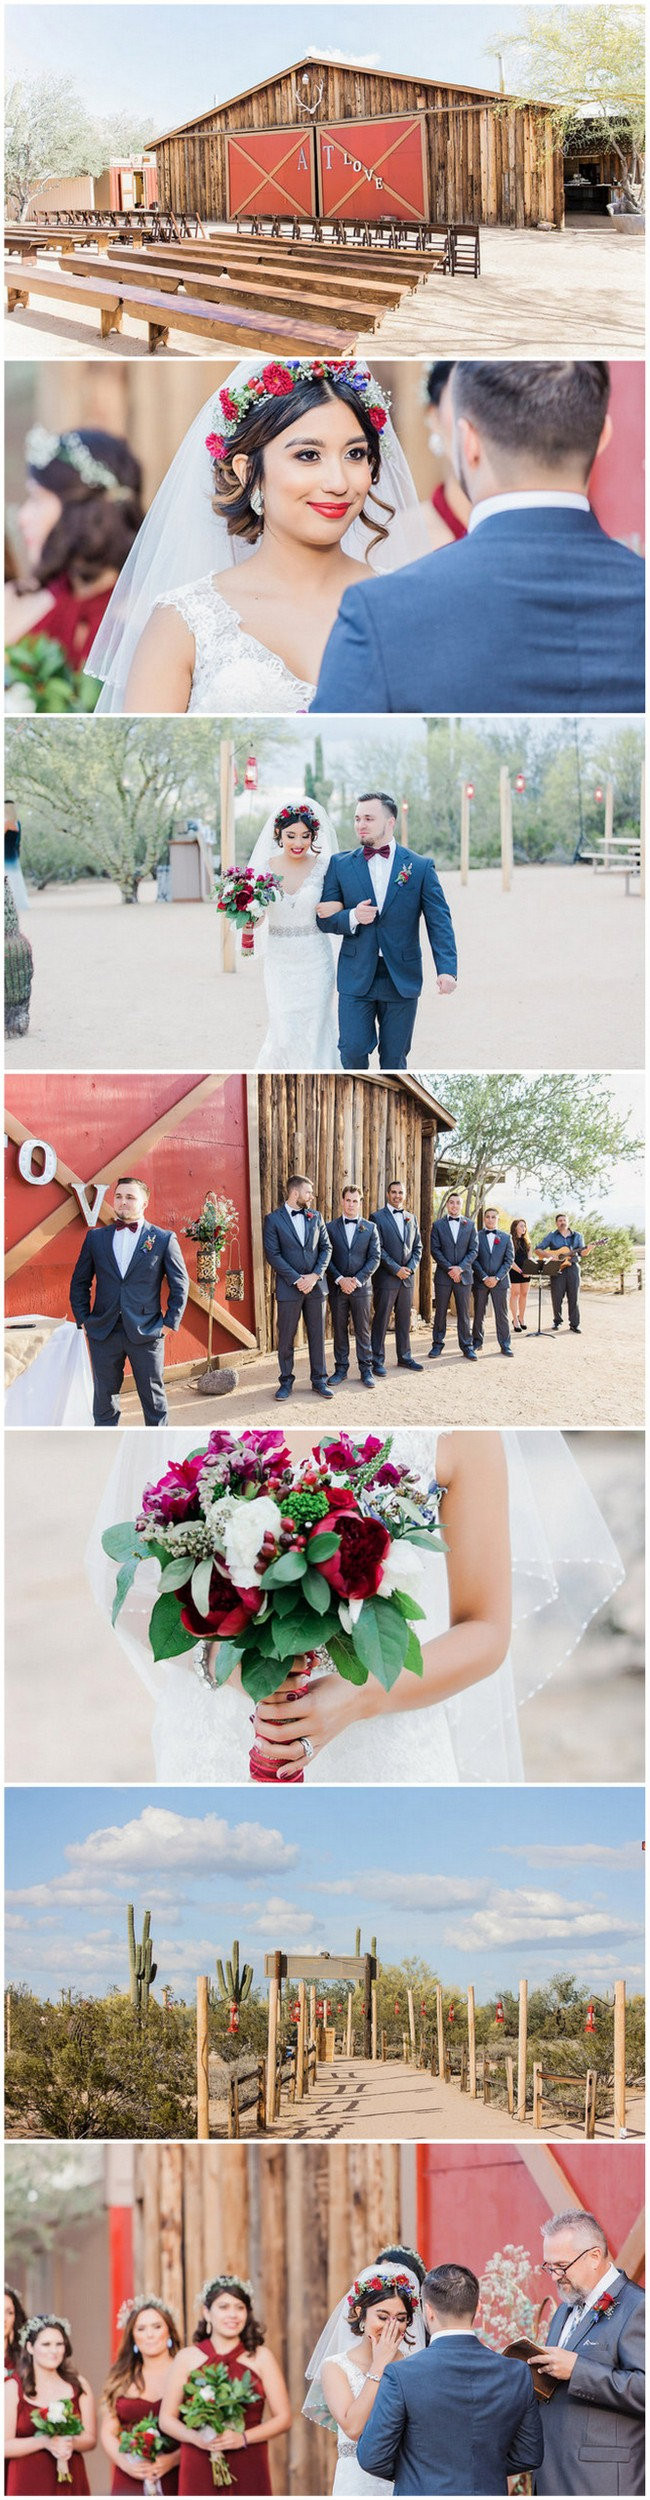 Bohemian Barn Wedding in the Desert - Jessica Q Photography